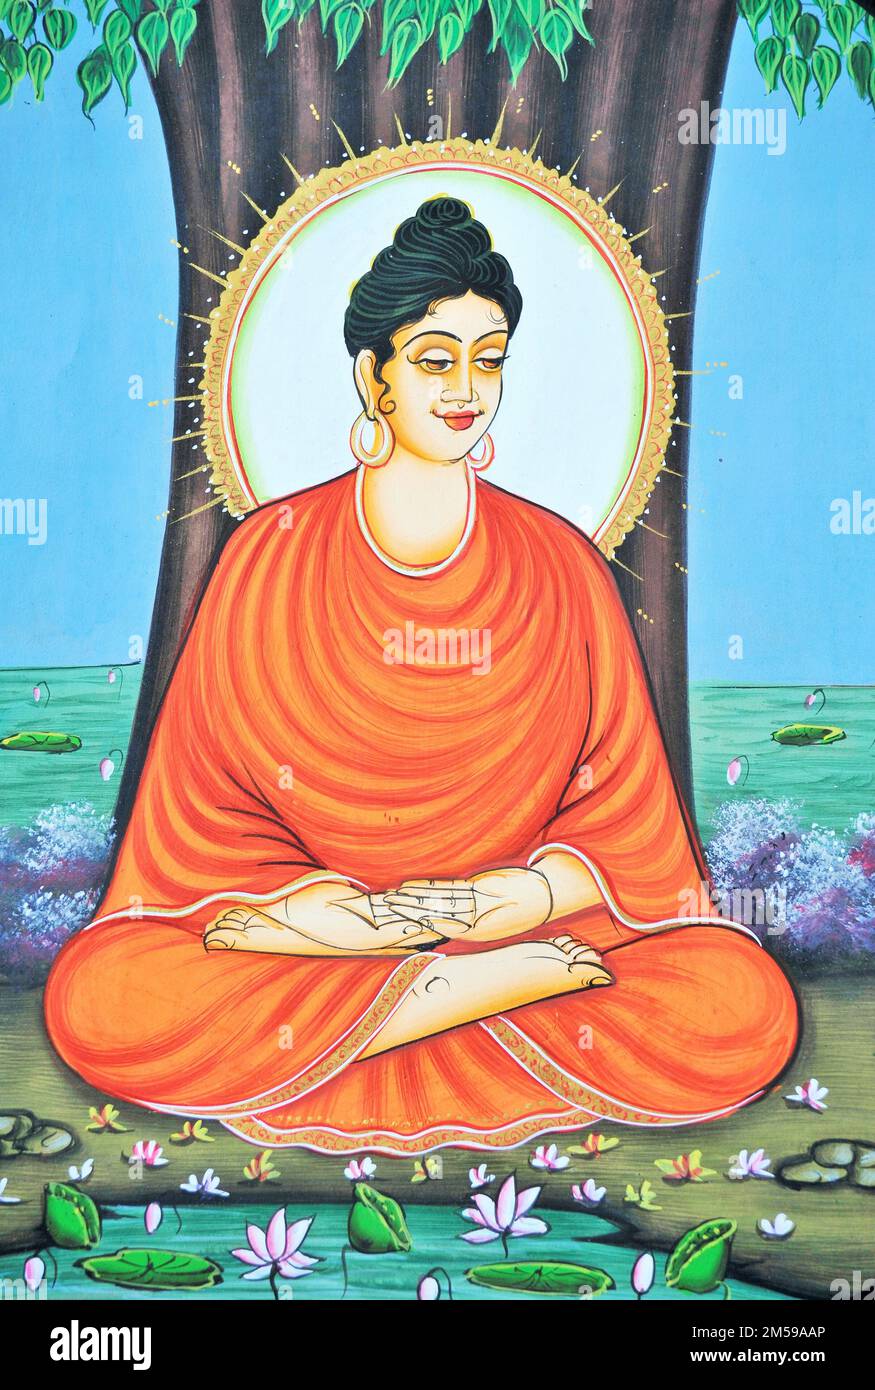 Lord Buddha meditating under tree artwork painting Stock Photo